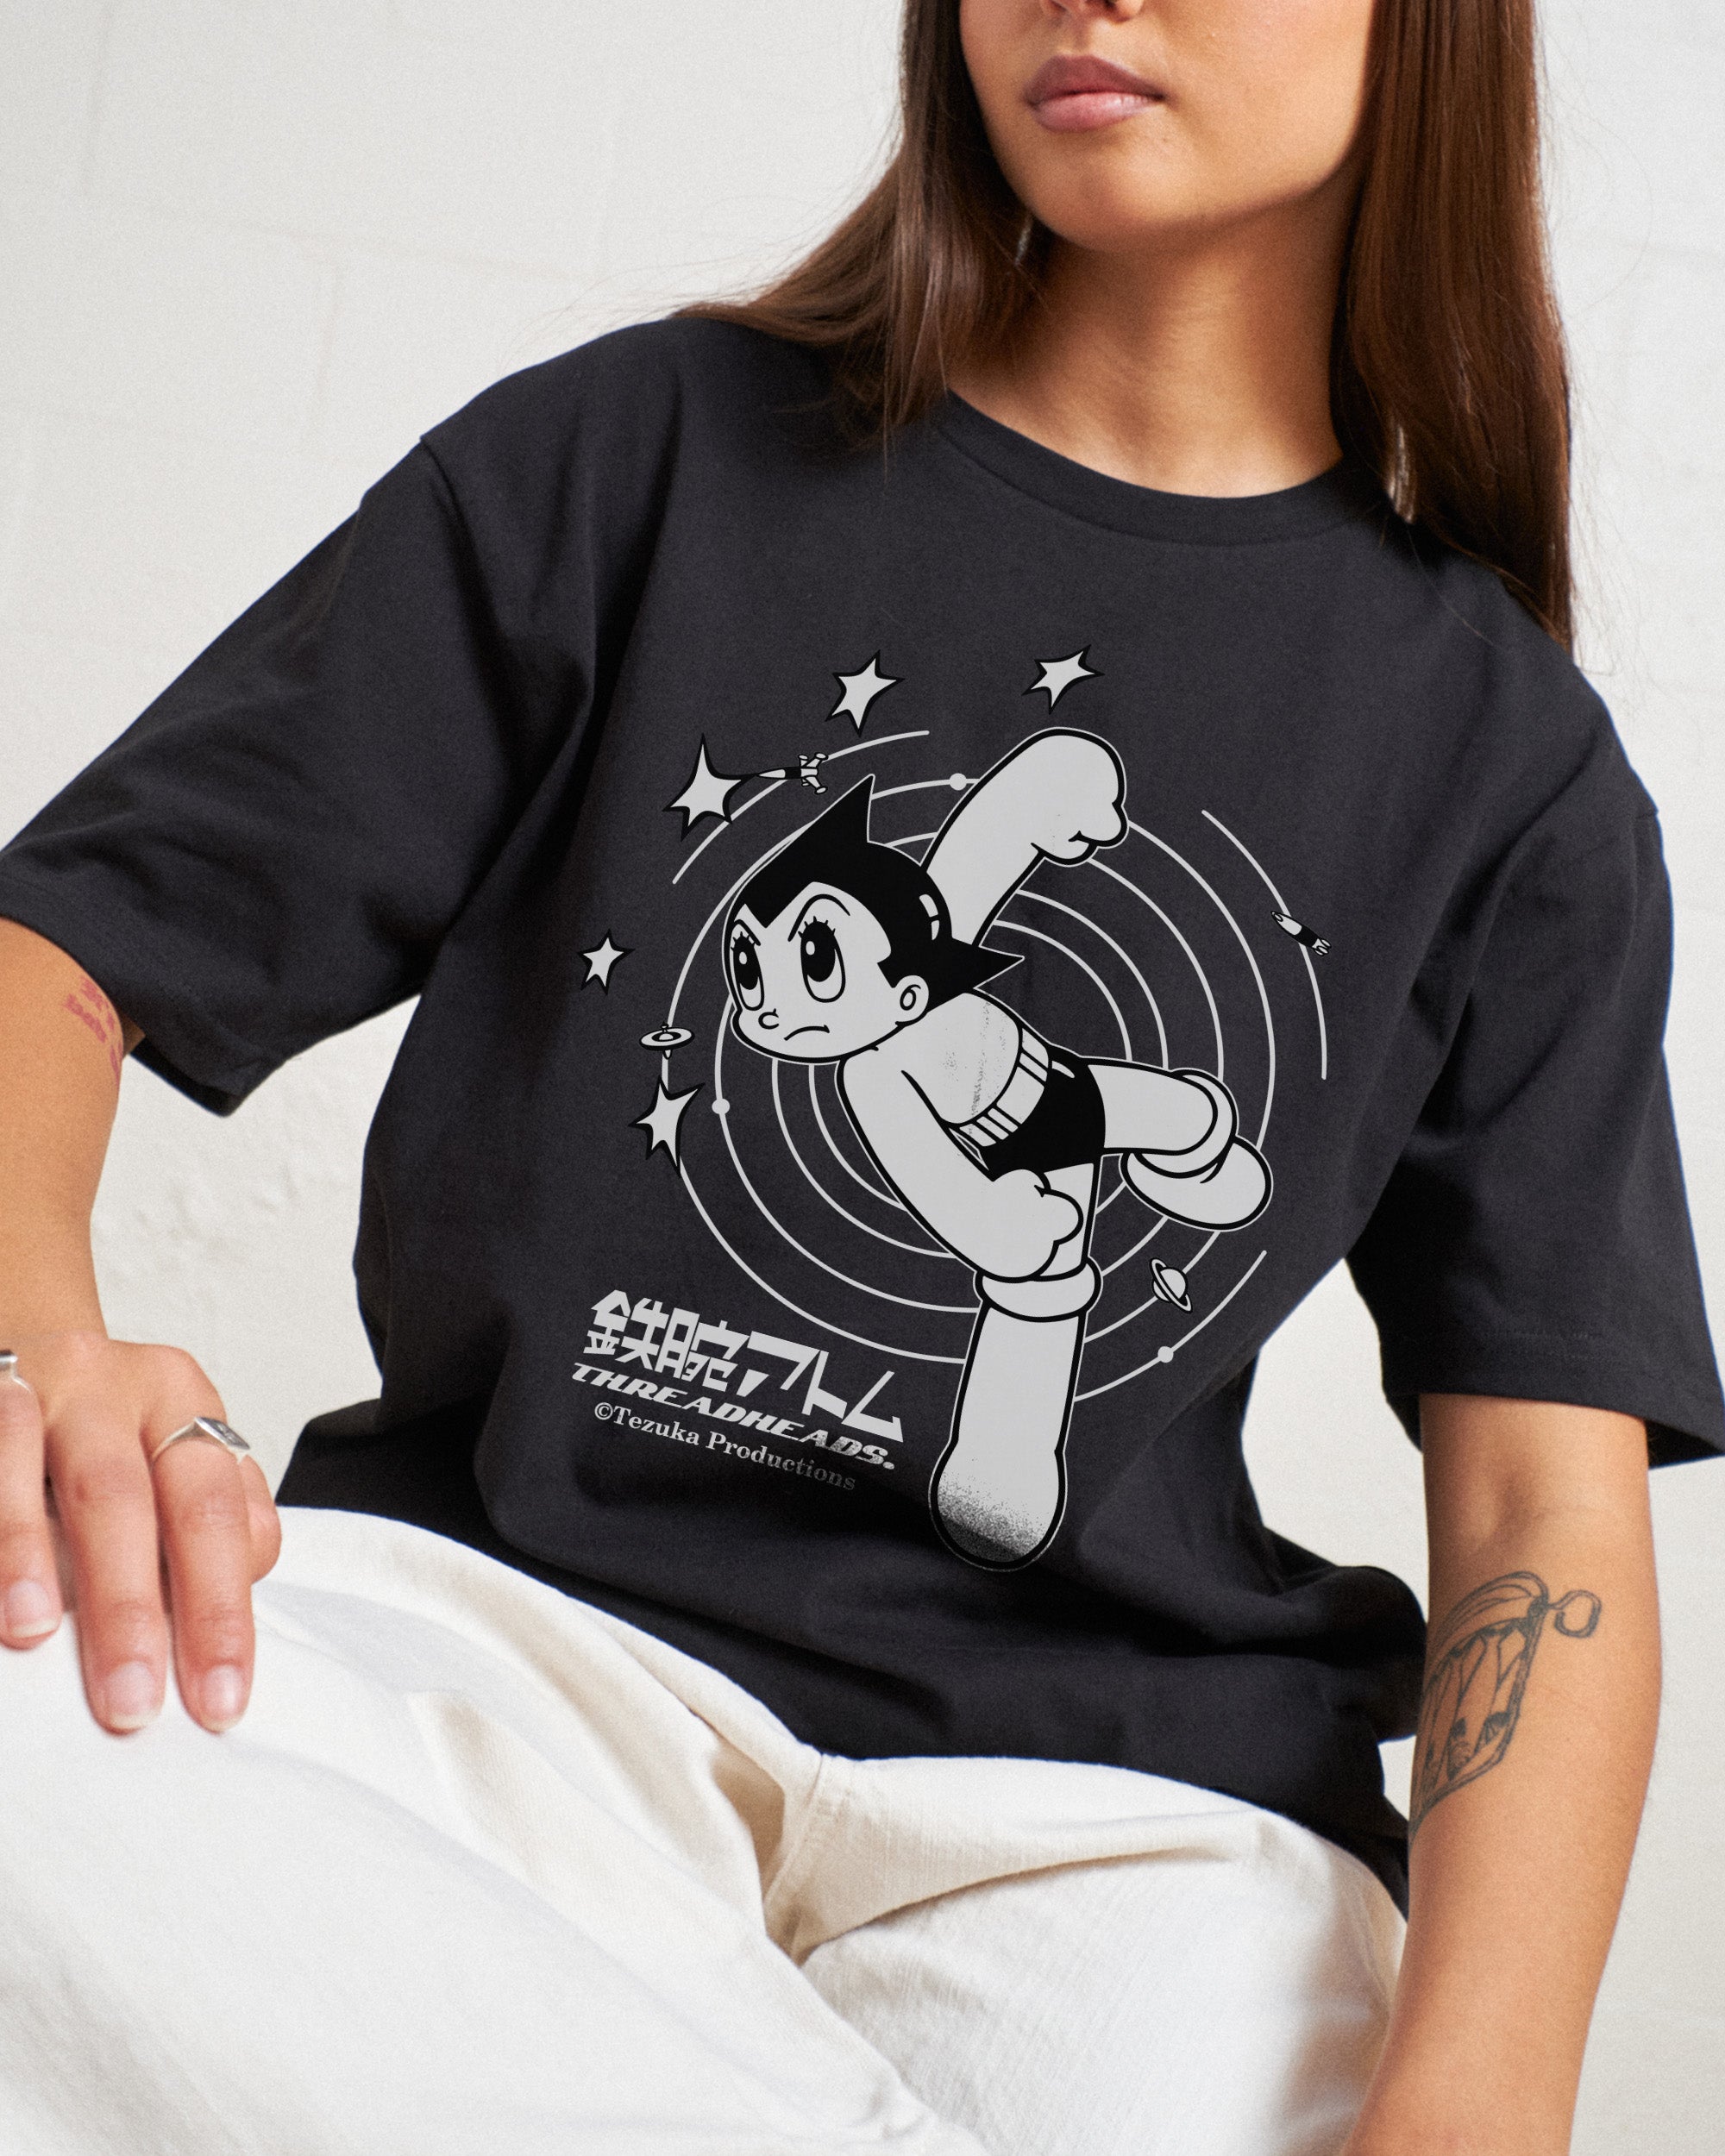 Astro Boy Punch T-Shirt